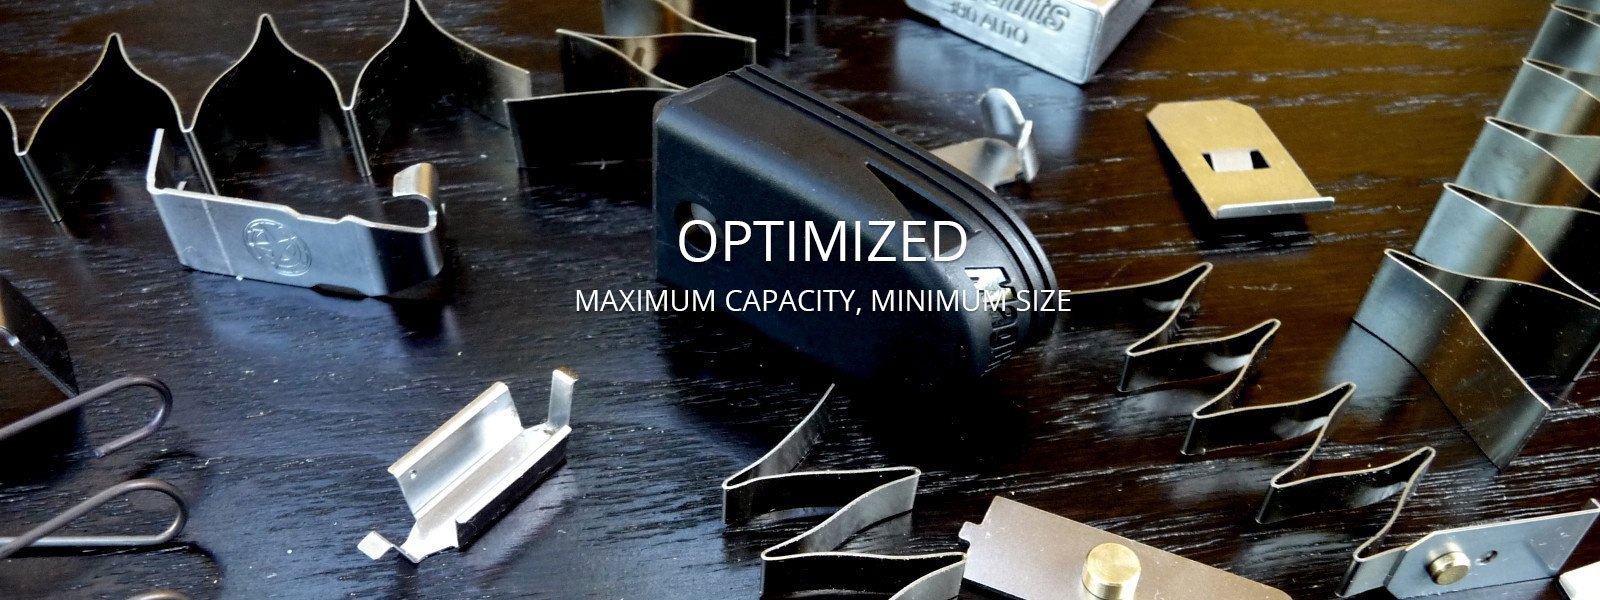 Optimized, Maximum Capacity, Minimum Size